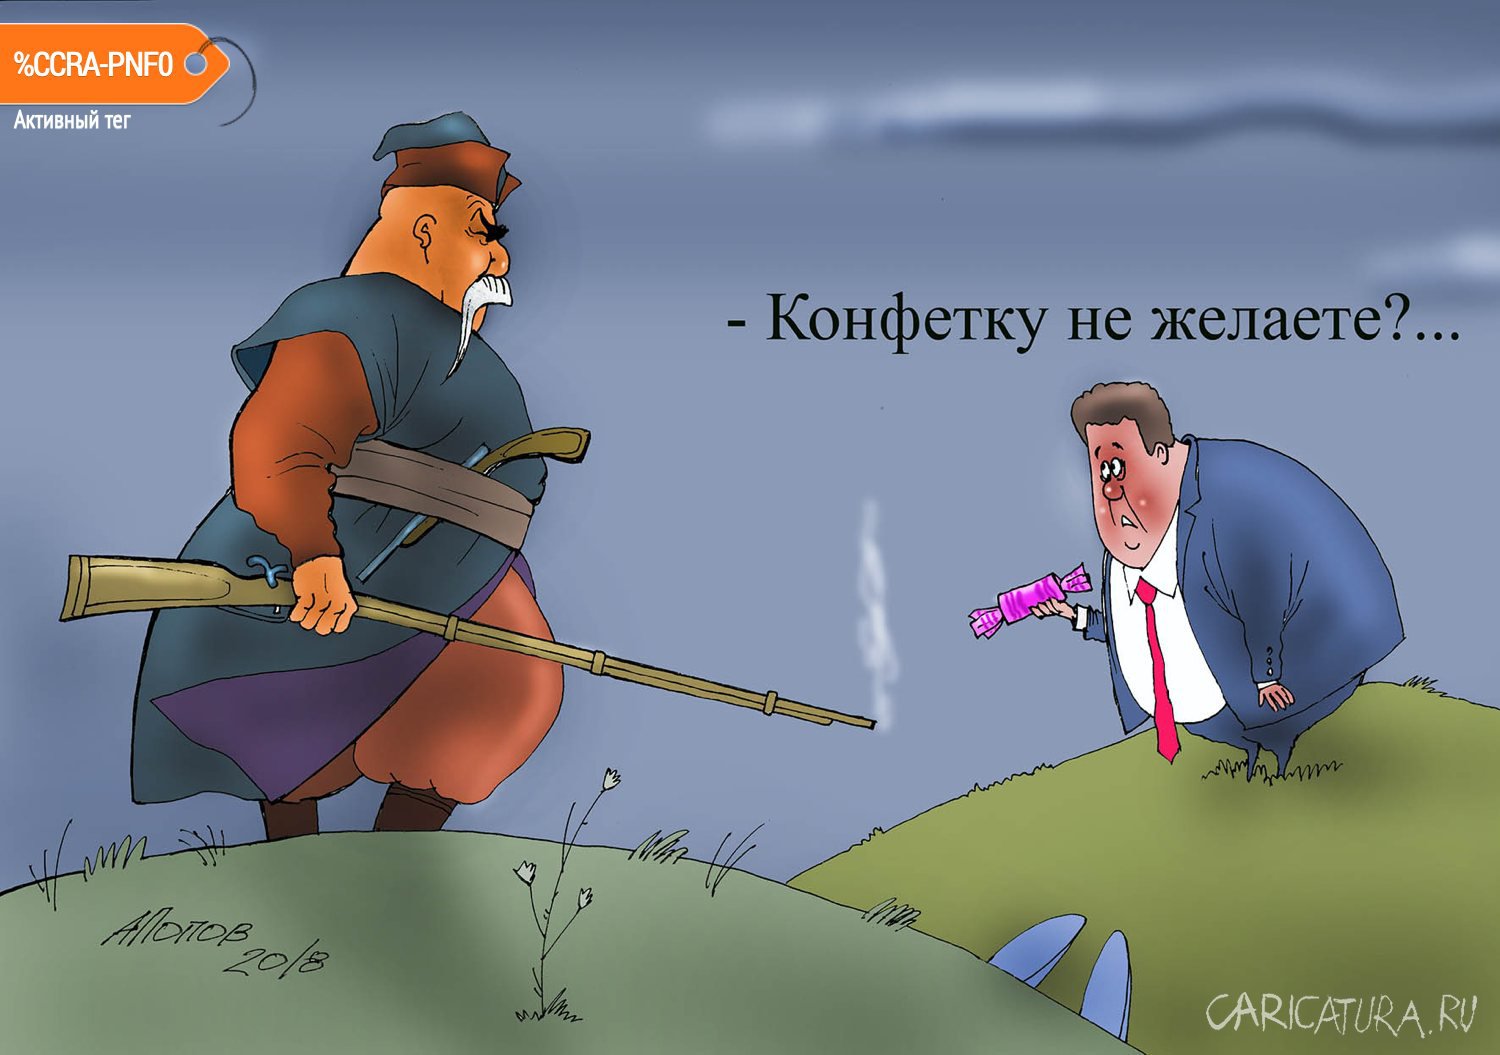 Карикатура "Не прокатит...", Александр Попов